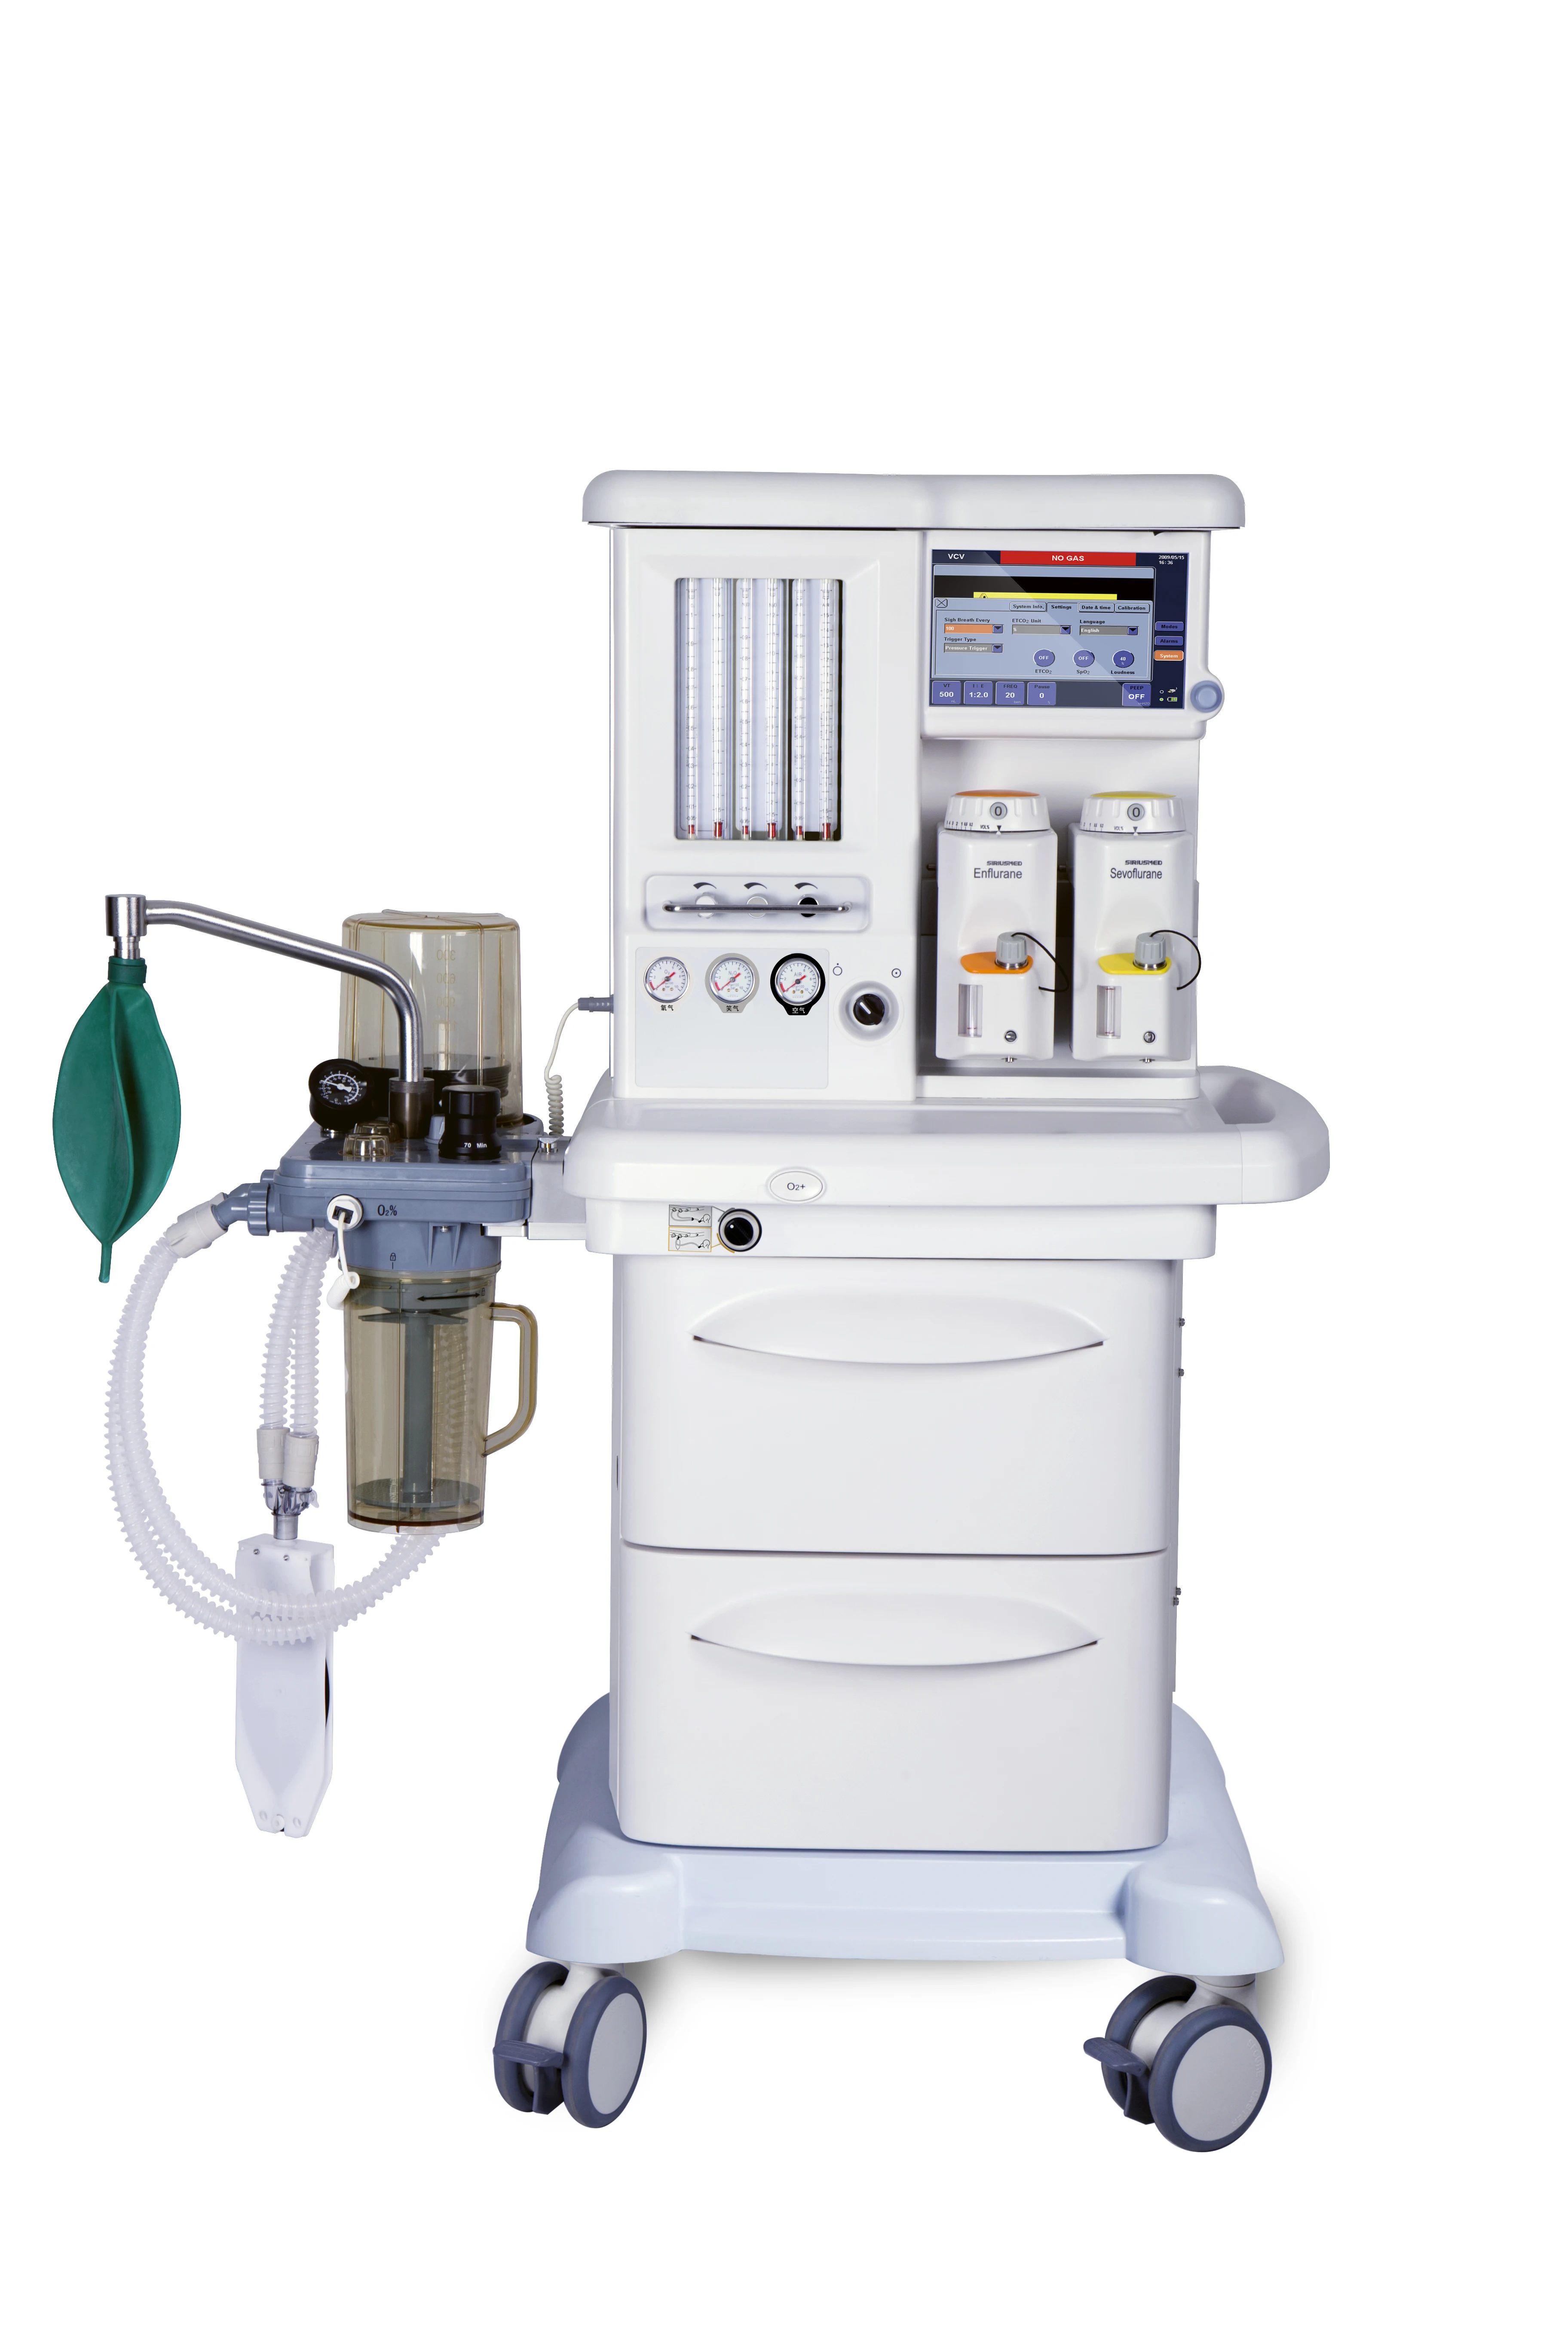 Cheap Modern High Quality X45 Multifunctional Anesthesia Machine